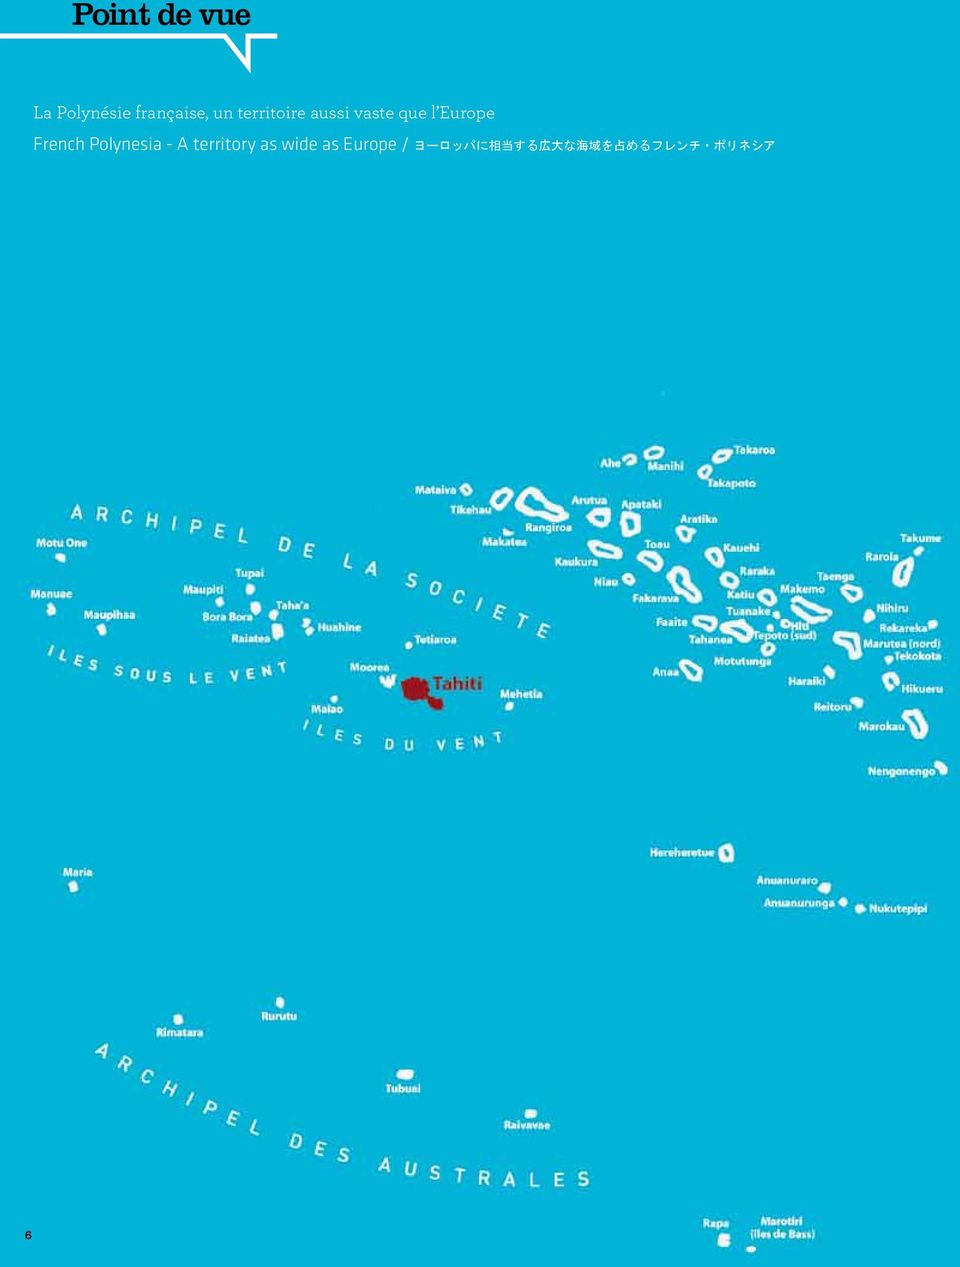 Polynesia - A territory as wide as Europe